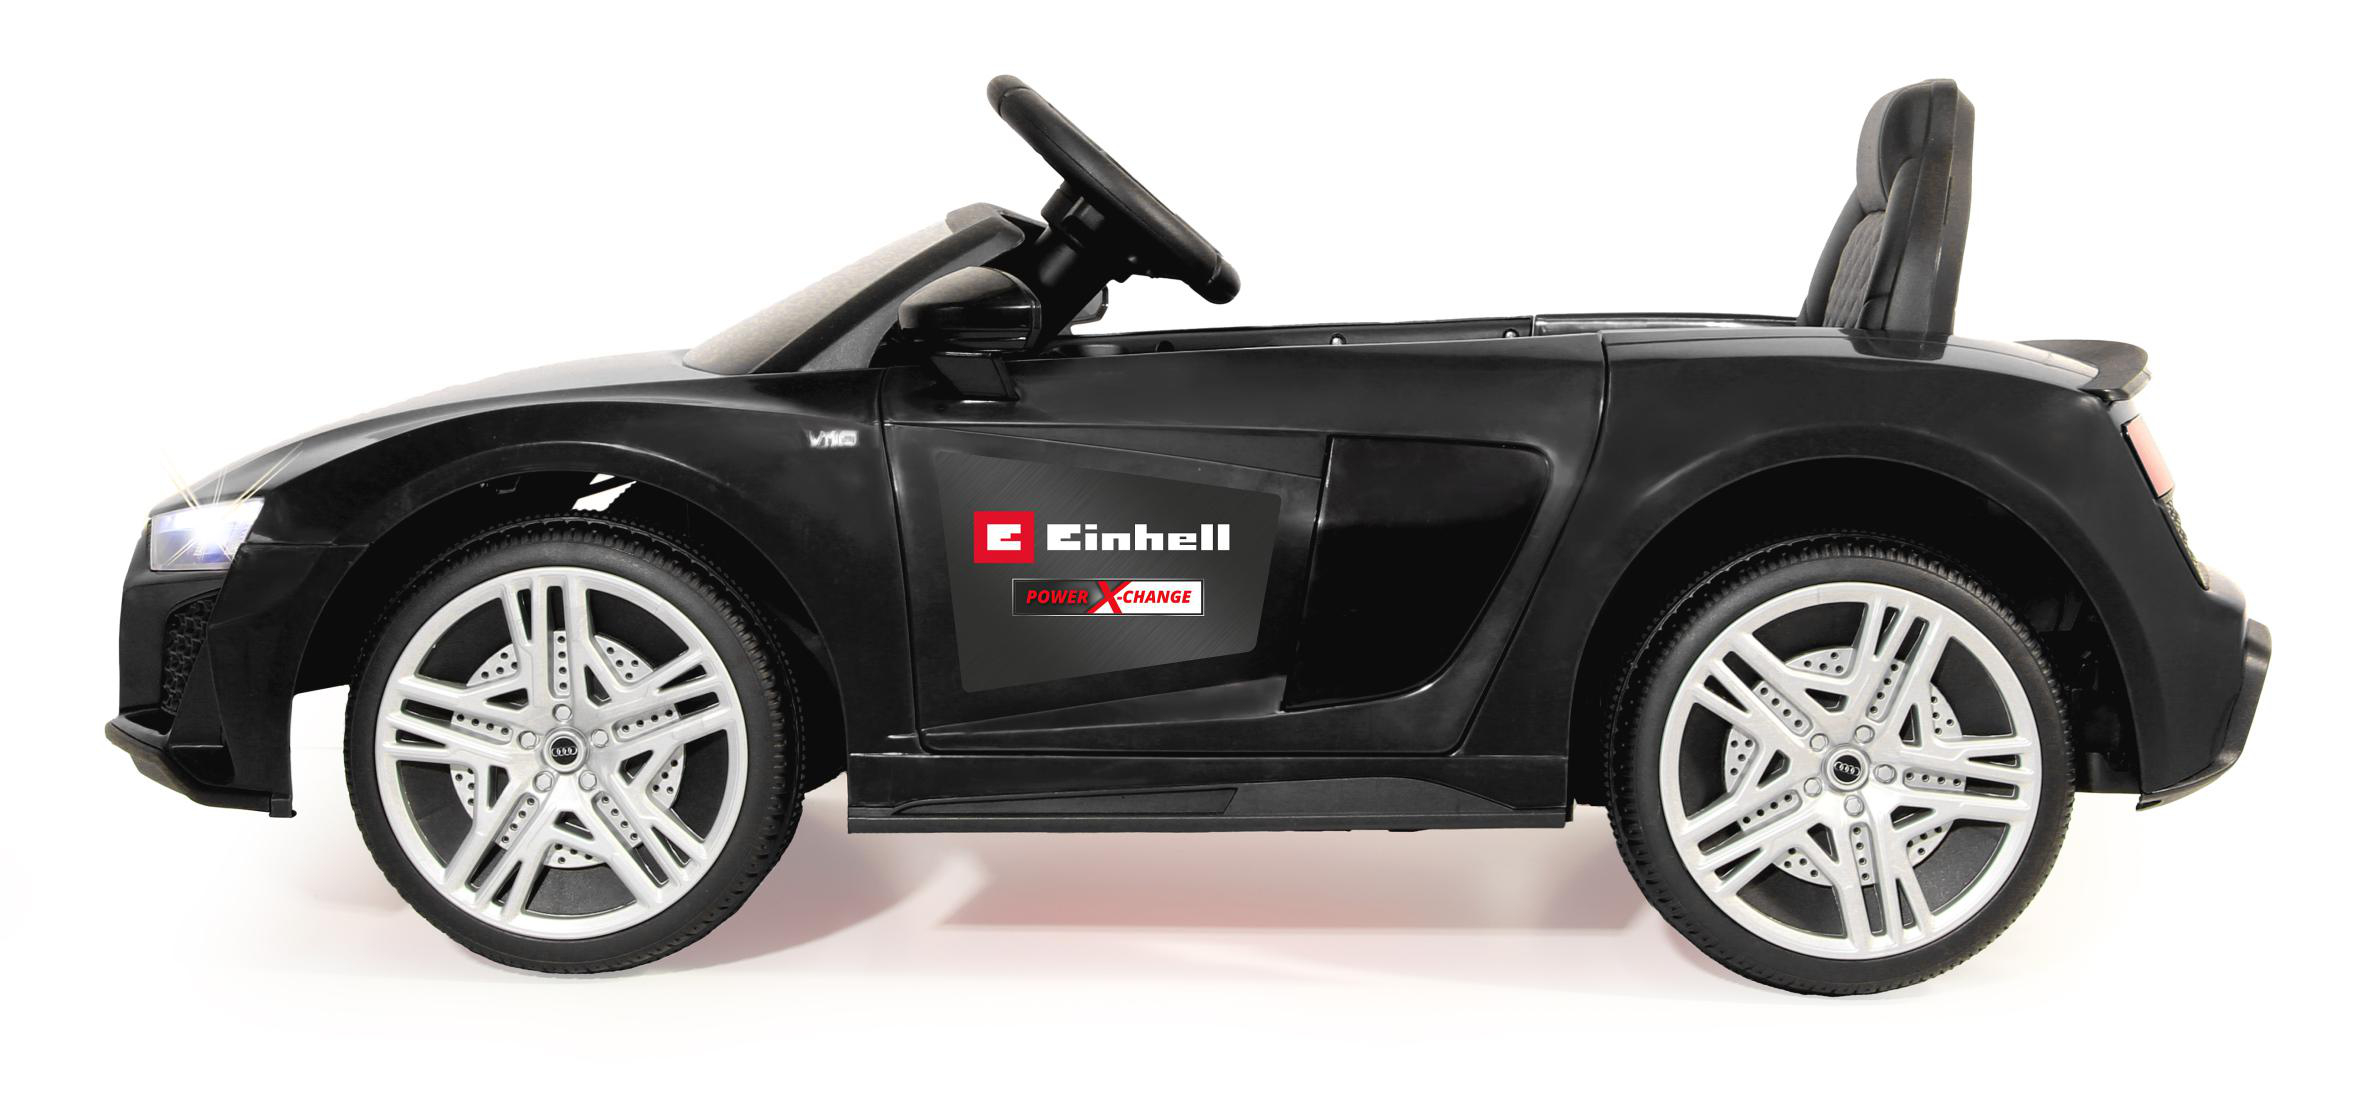 Spyder R8 Set schwarz Ride-on JAMARA Starter KIDS inkl. 18V Elektrofahrzeug Einhell Power Audi X-Change Schwarz